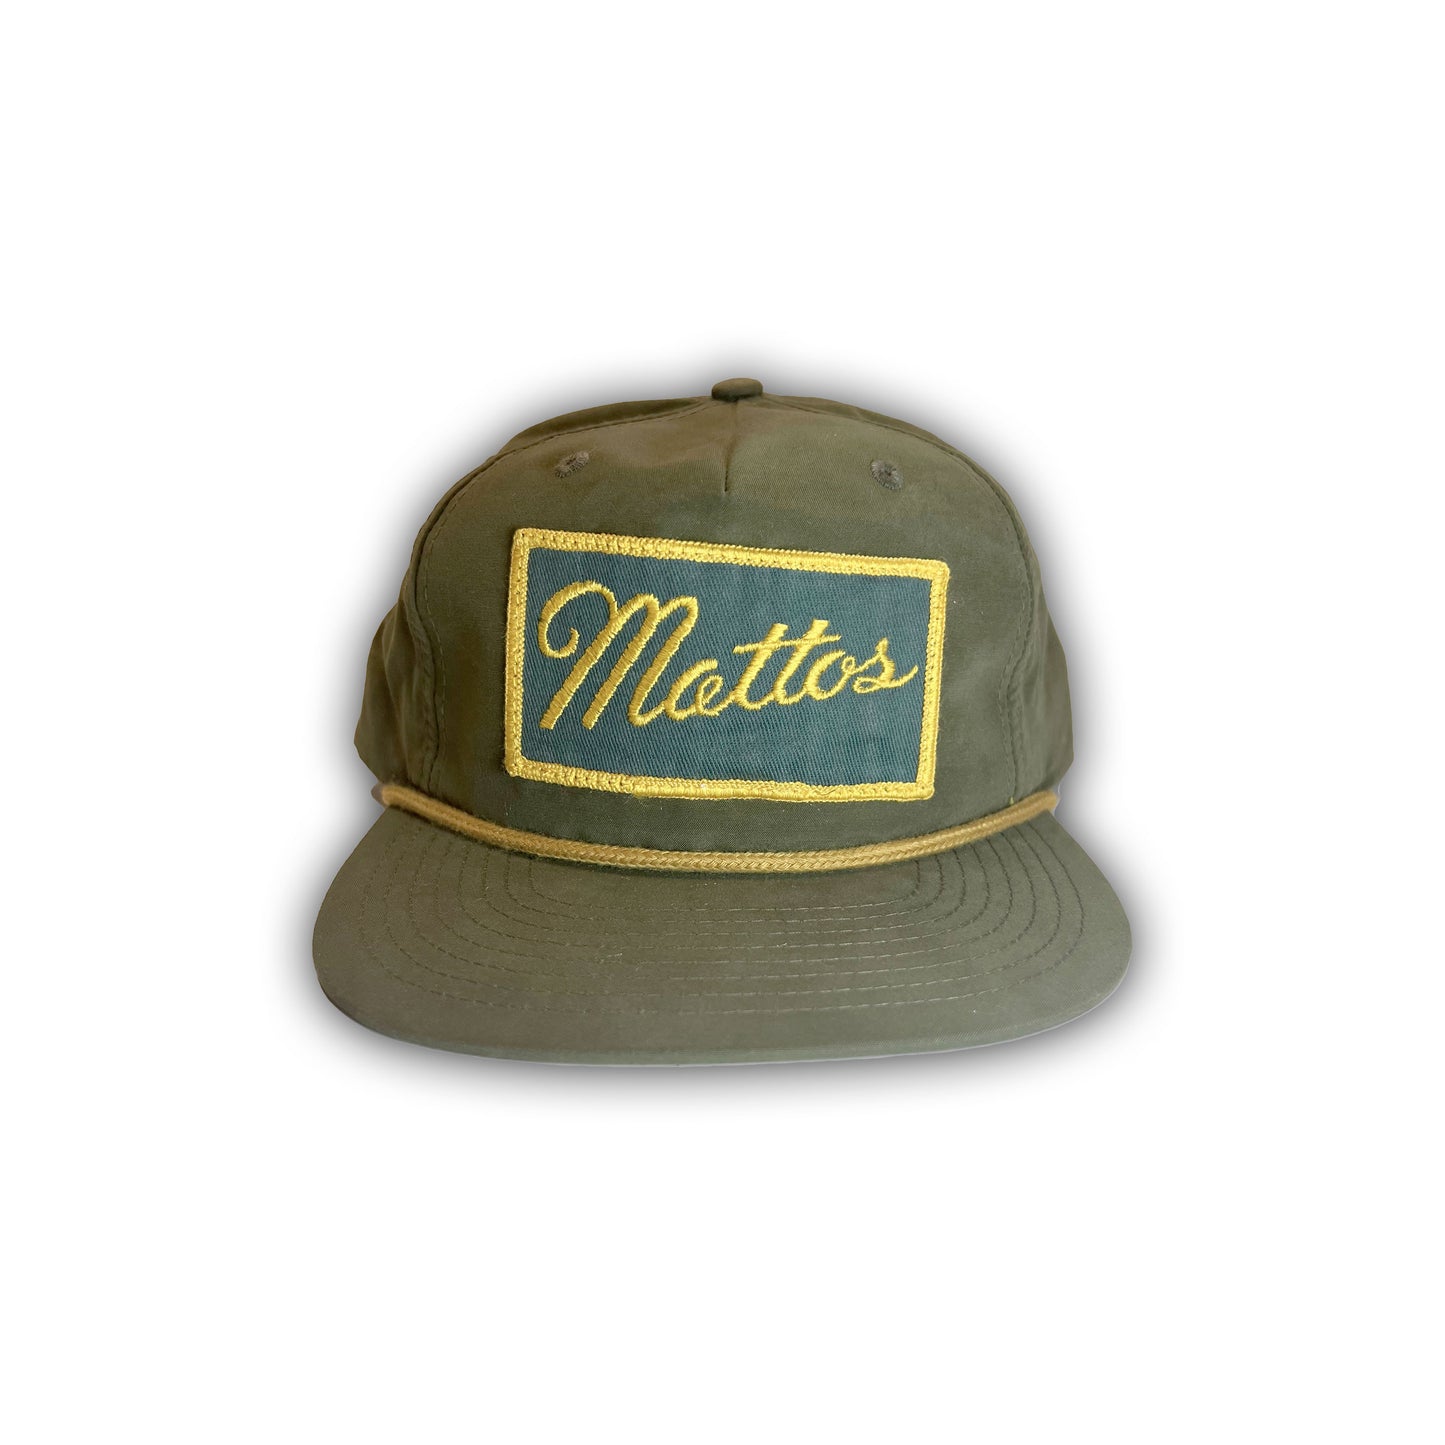 Mattos. Hat. Green/Gold.